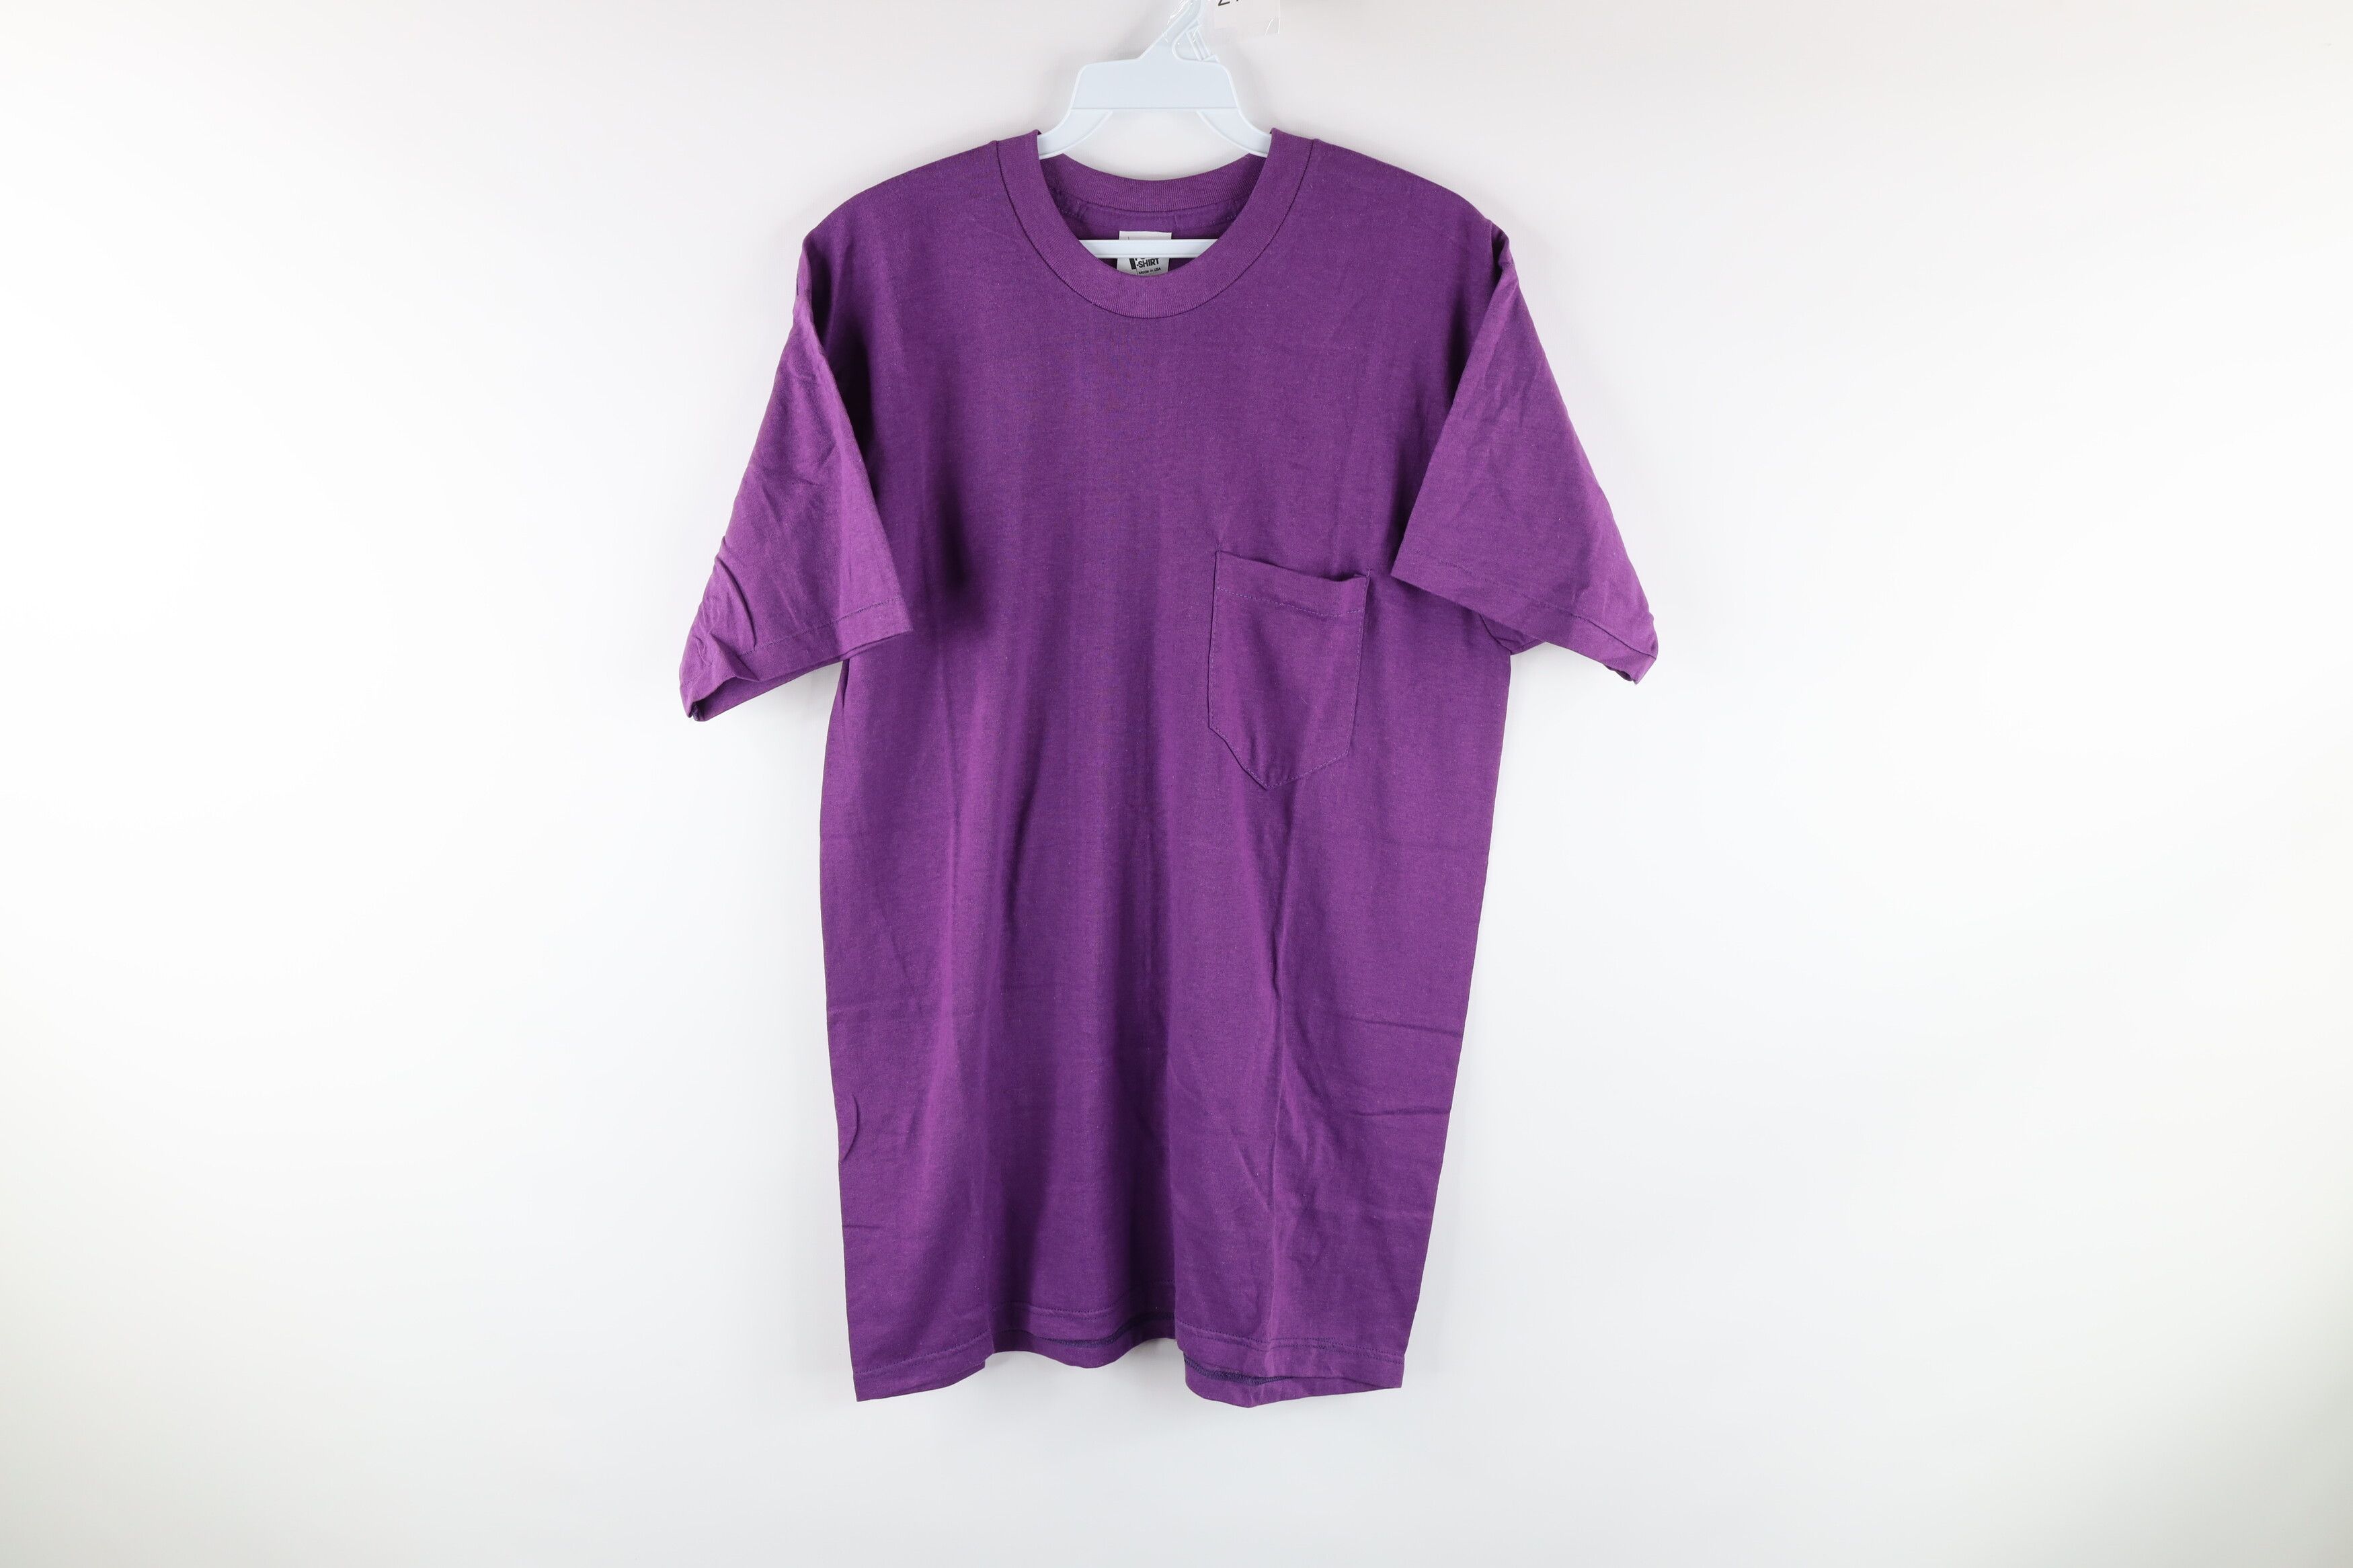 Vintage Vintage 80s Streetwear Short Sleeve Pocket T-Shirt Purple Size US L / EU 52-54 / 3 - 1 Preview